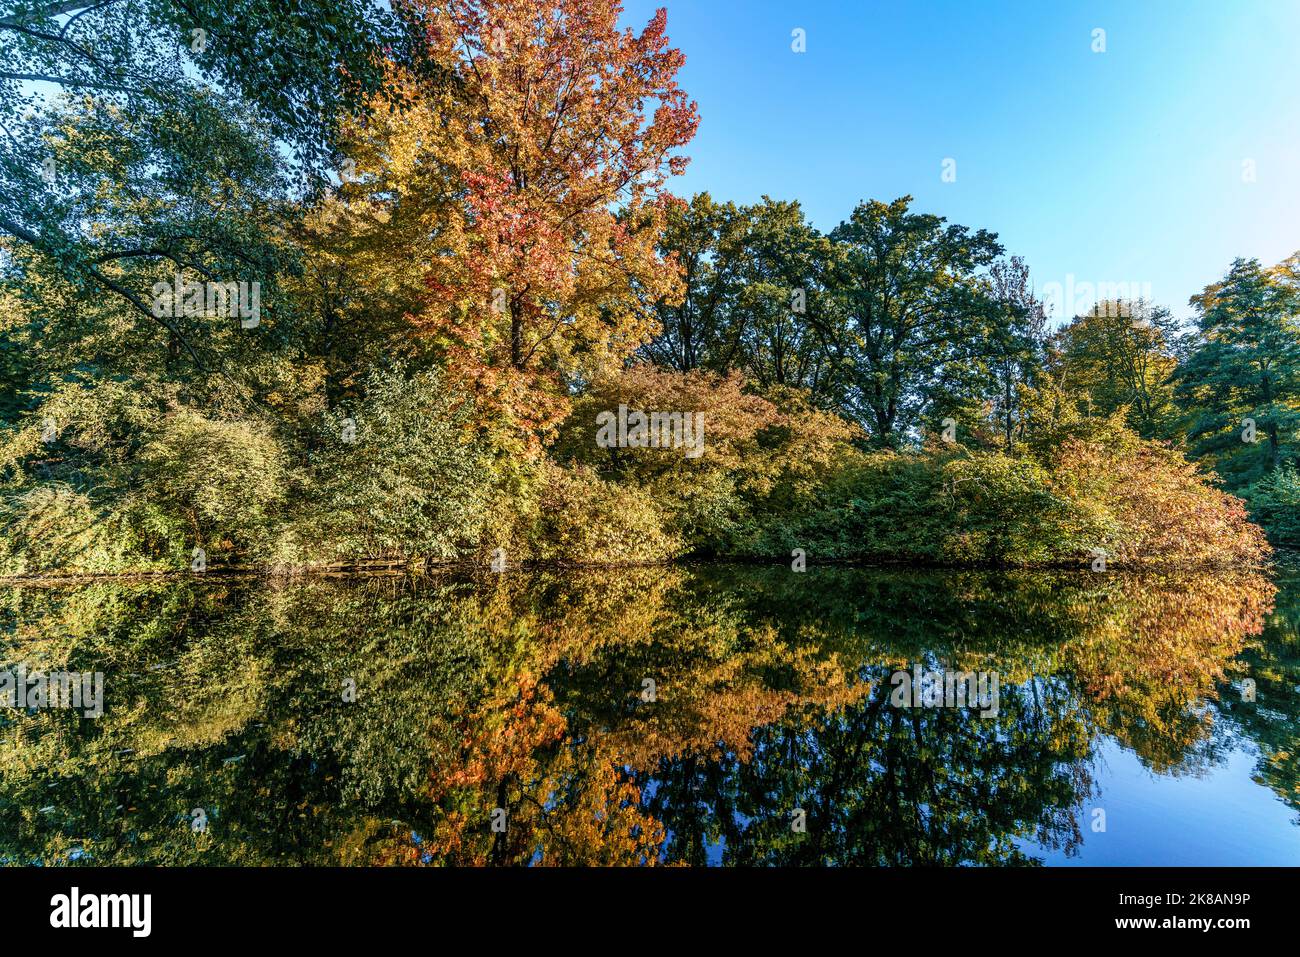 Tiergarten im Herbst, Herbstfarben, verstärkte Blätter, Berlin, Deutschland Stockfoto